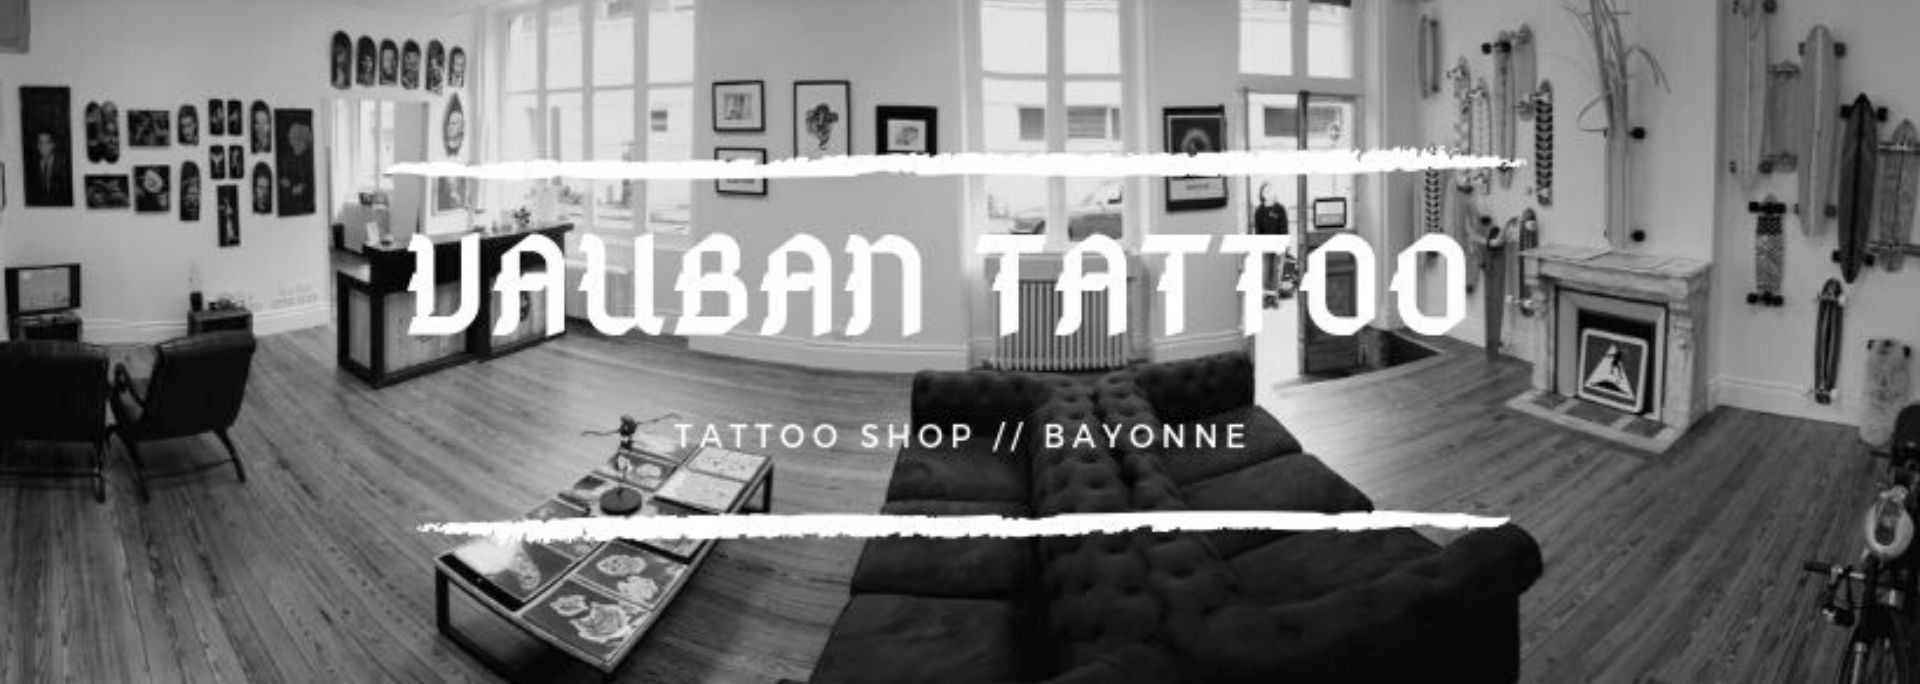 Vauban Tattoo Bayonne : salon de piercing et tatouage